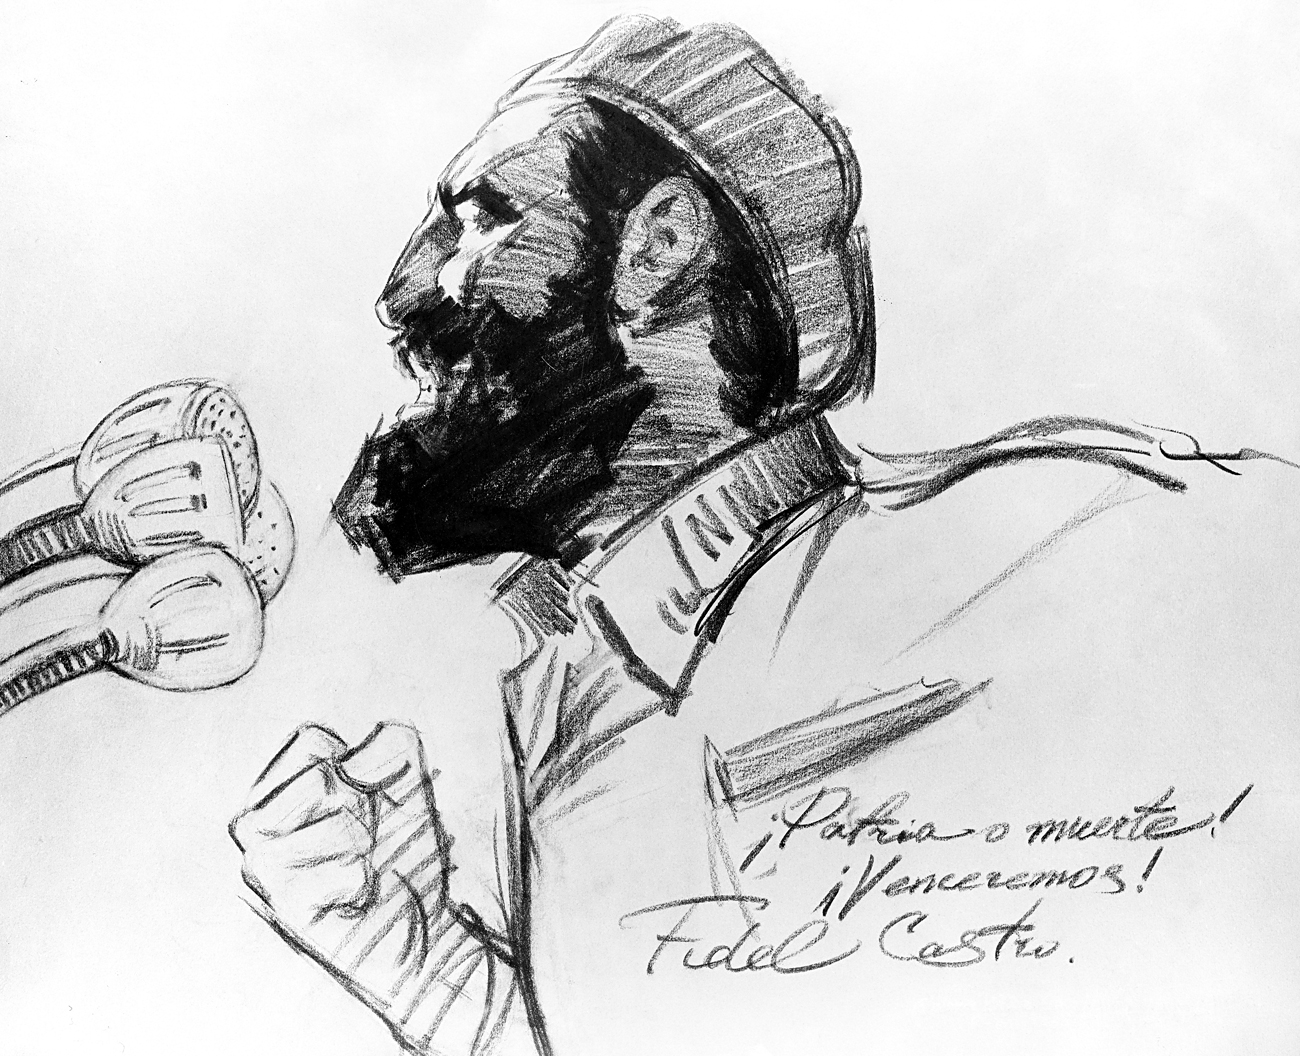 "Patria o Muerte! Venceremos! ". A portrait of Fidel Castro from painter Ivan Akimovish Sushchenko's series "My impressions of Cuba" (1962).